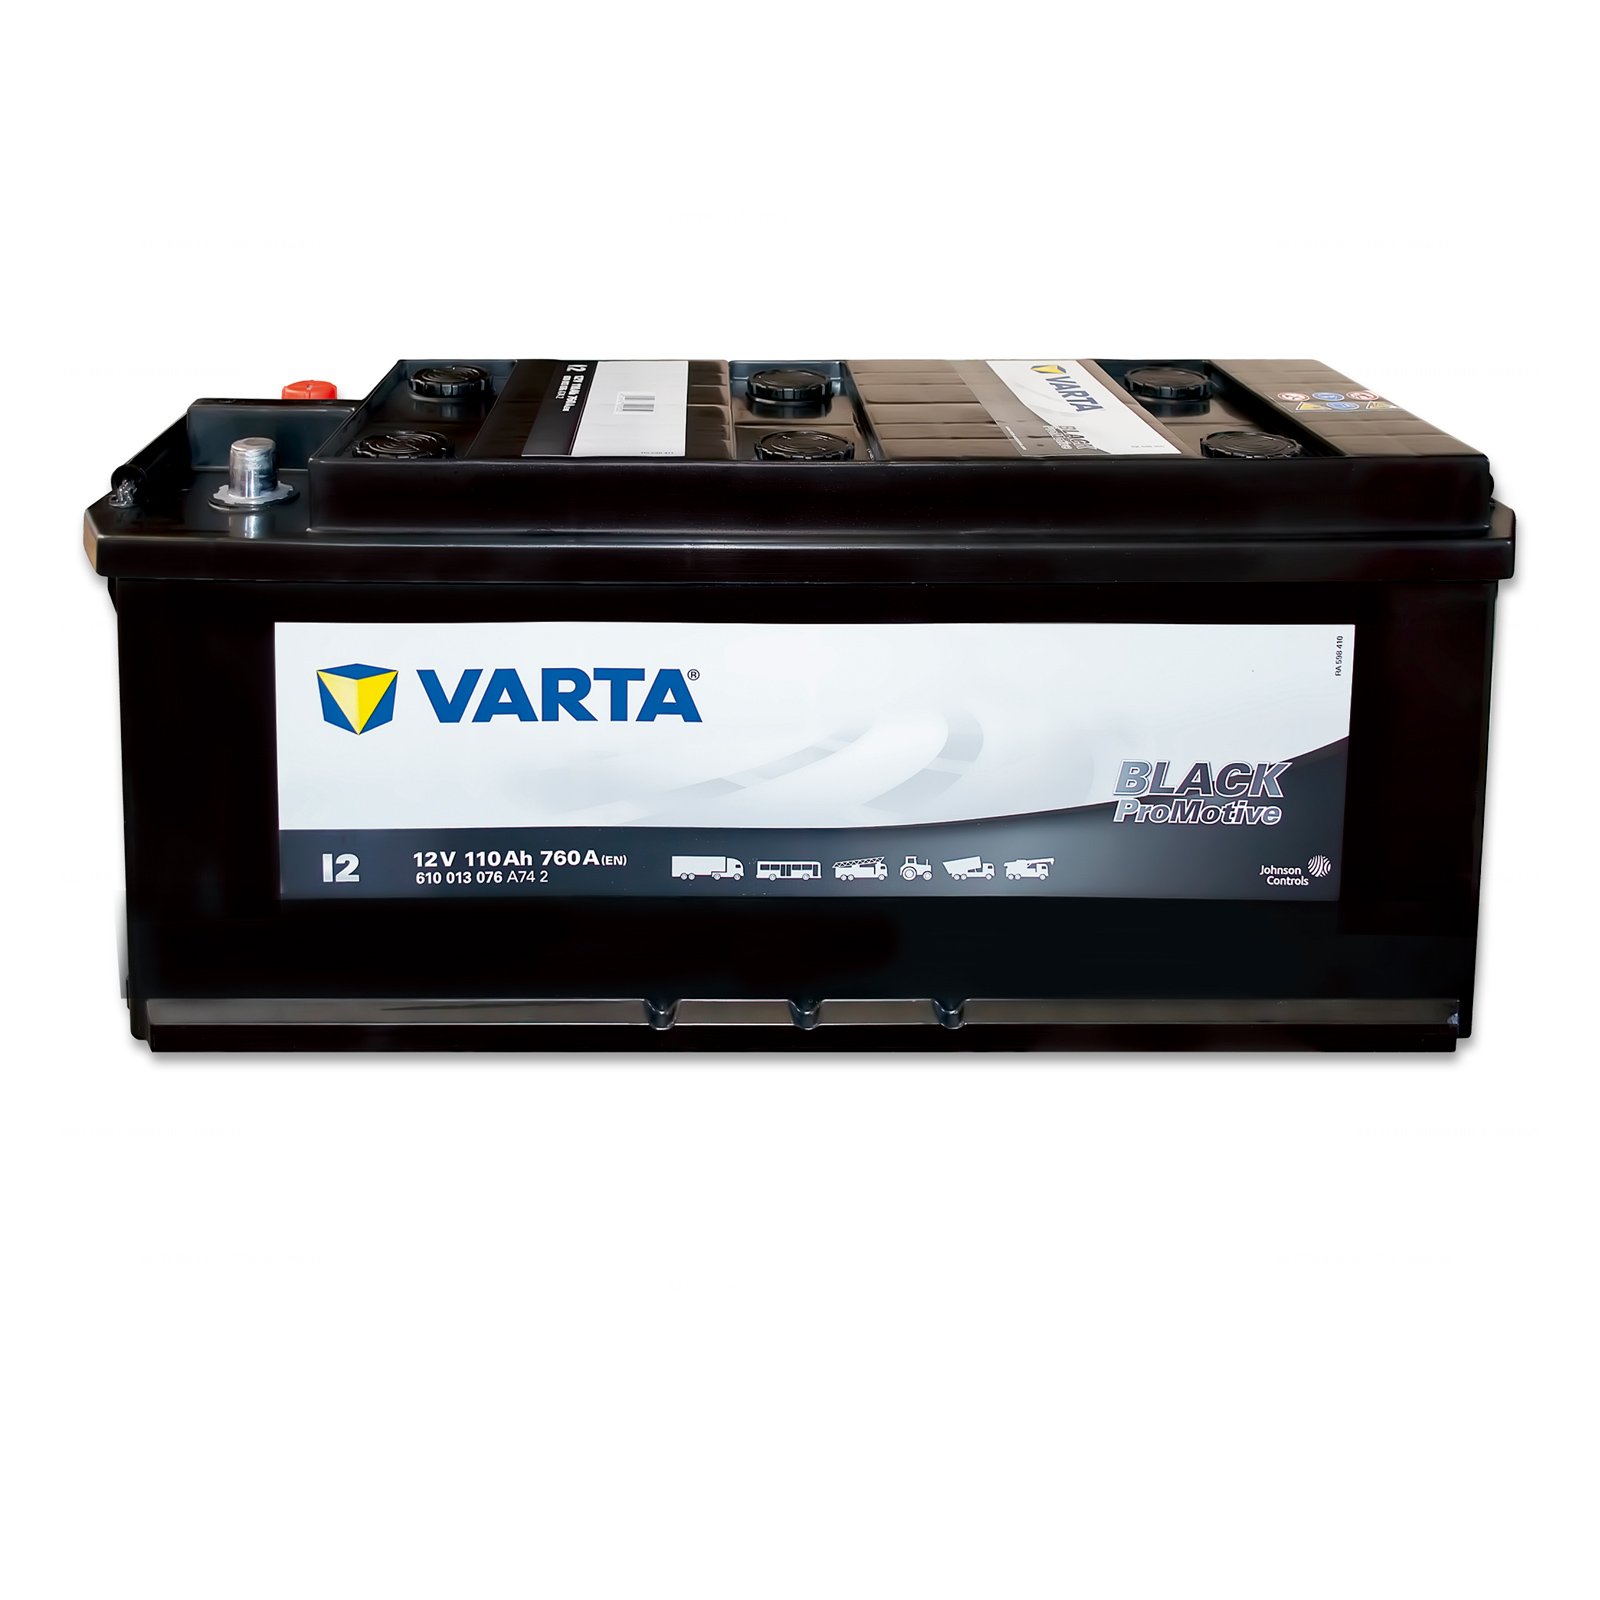 Varta Promotive Black I2-12 V / 110 Ah - 760 A/EN SHD RF Nutzfahrzeugbatterie von Varta